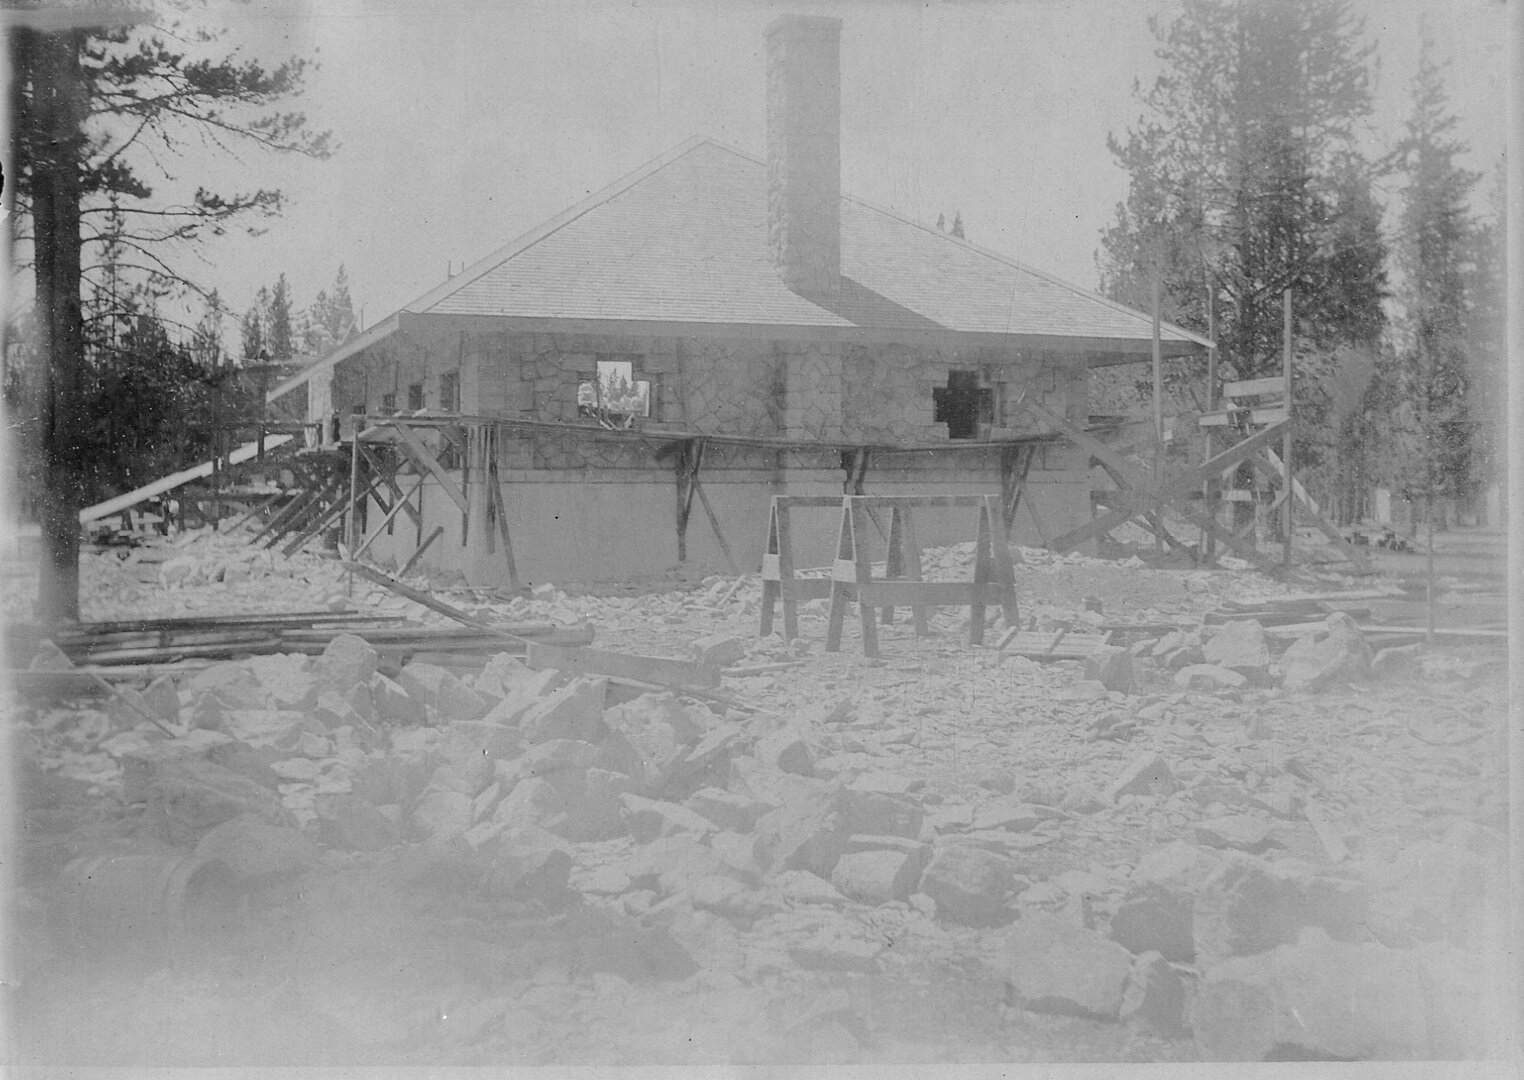  Construction of West Yellowstone depot, circa 1909. 